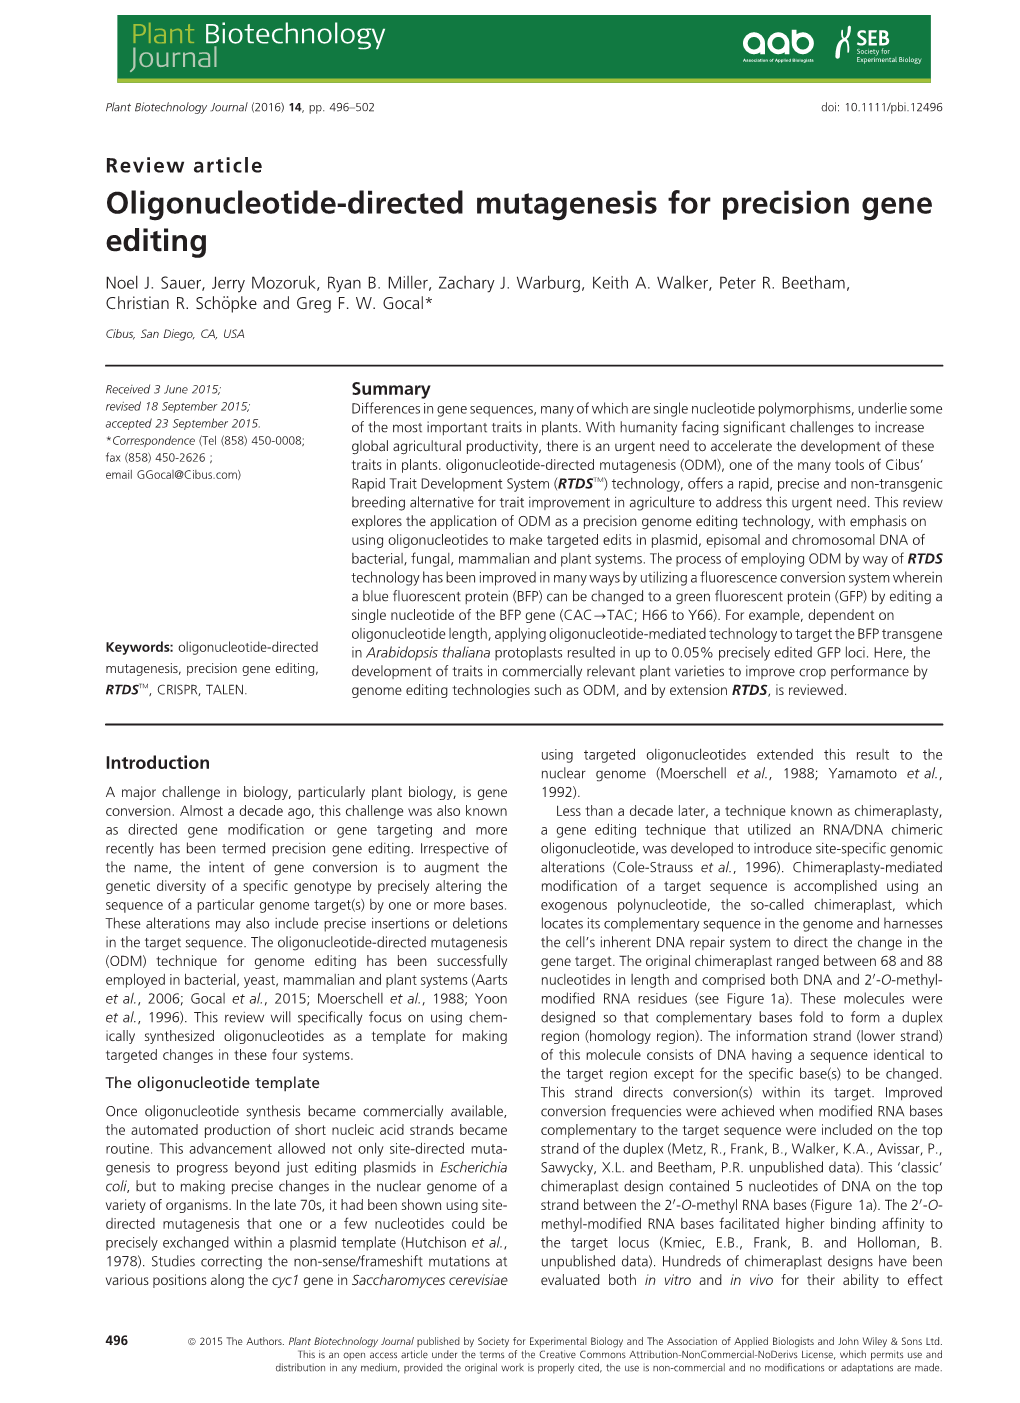 Directed Mutagenesis for Precision Gene Editing